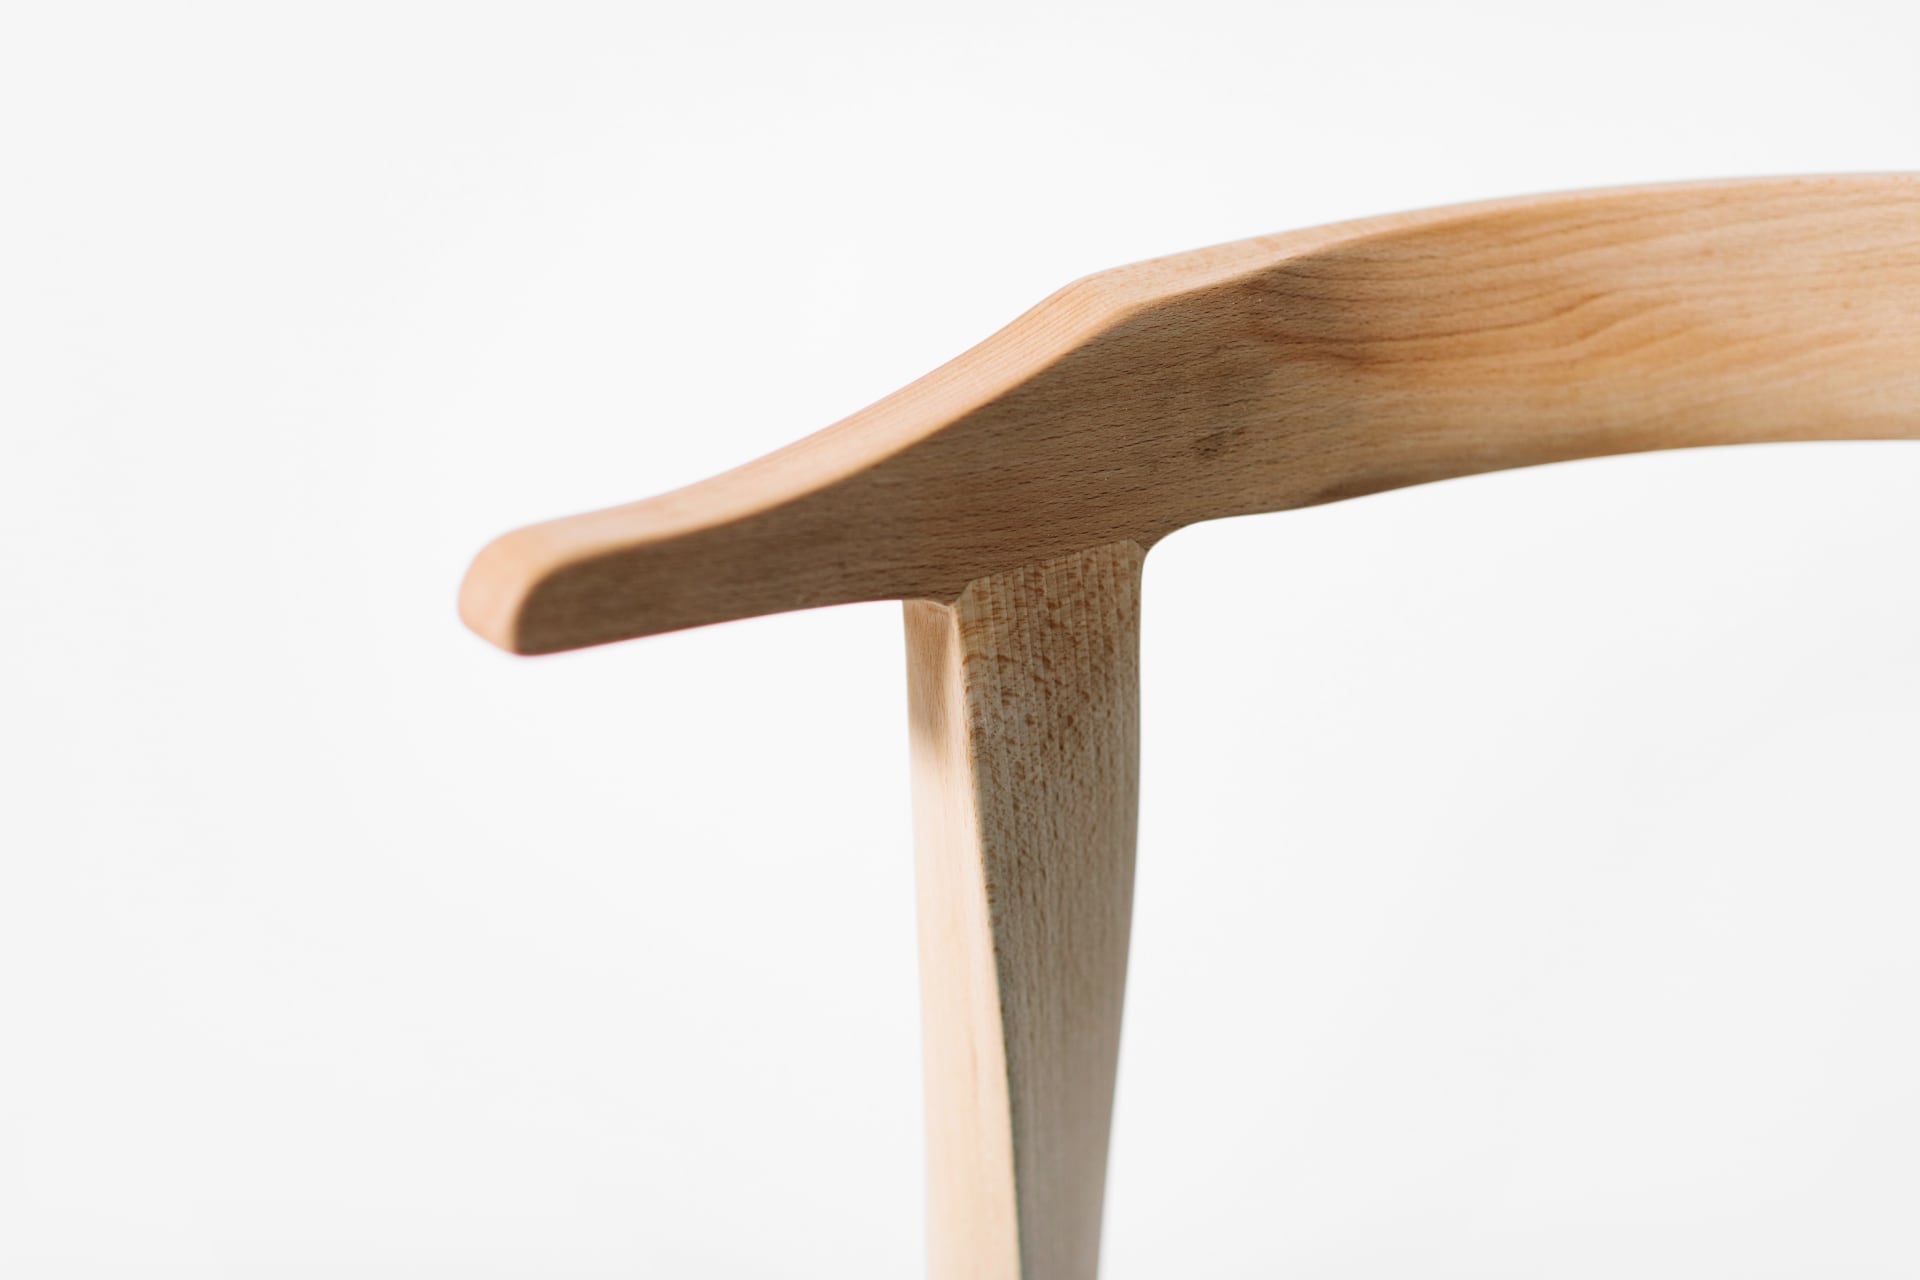 Chair 1.0 | Leon Yamada